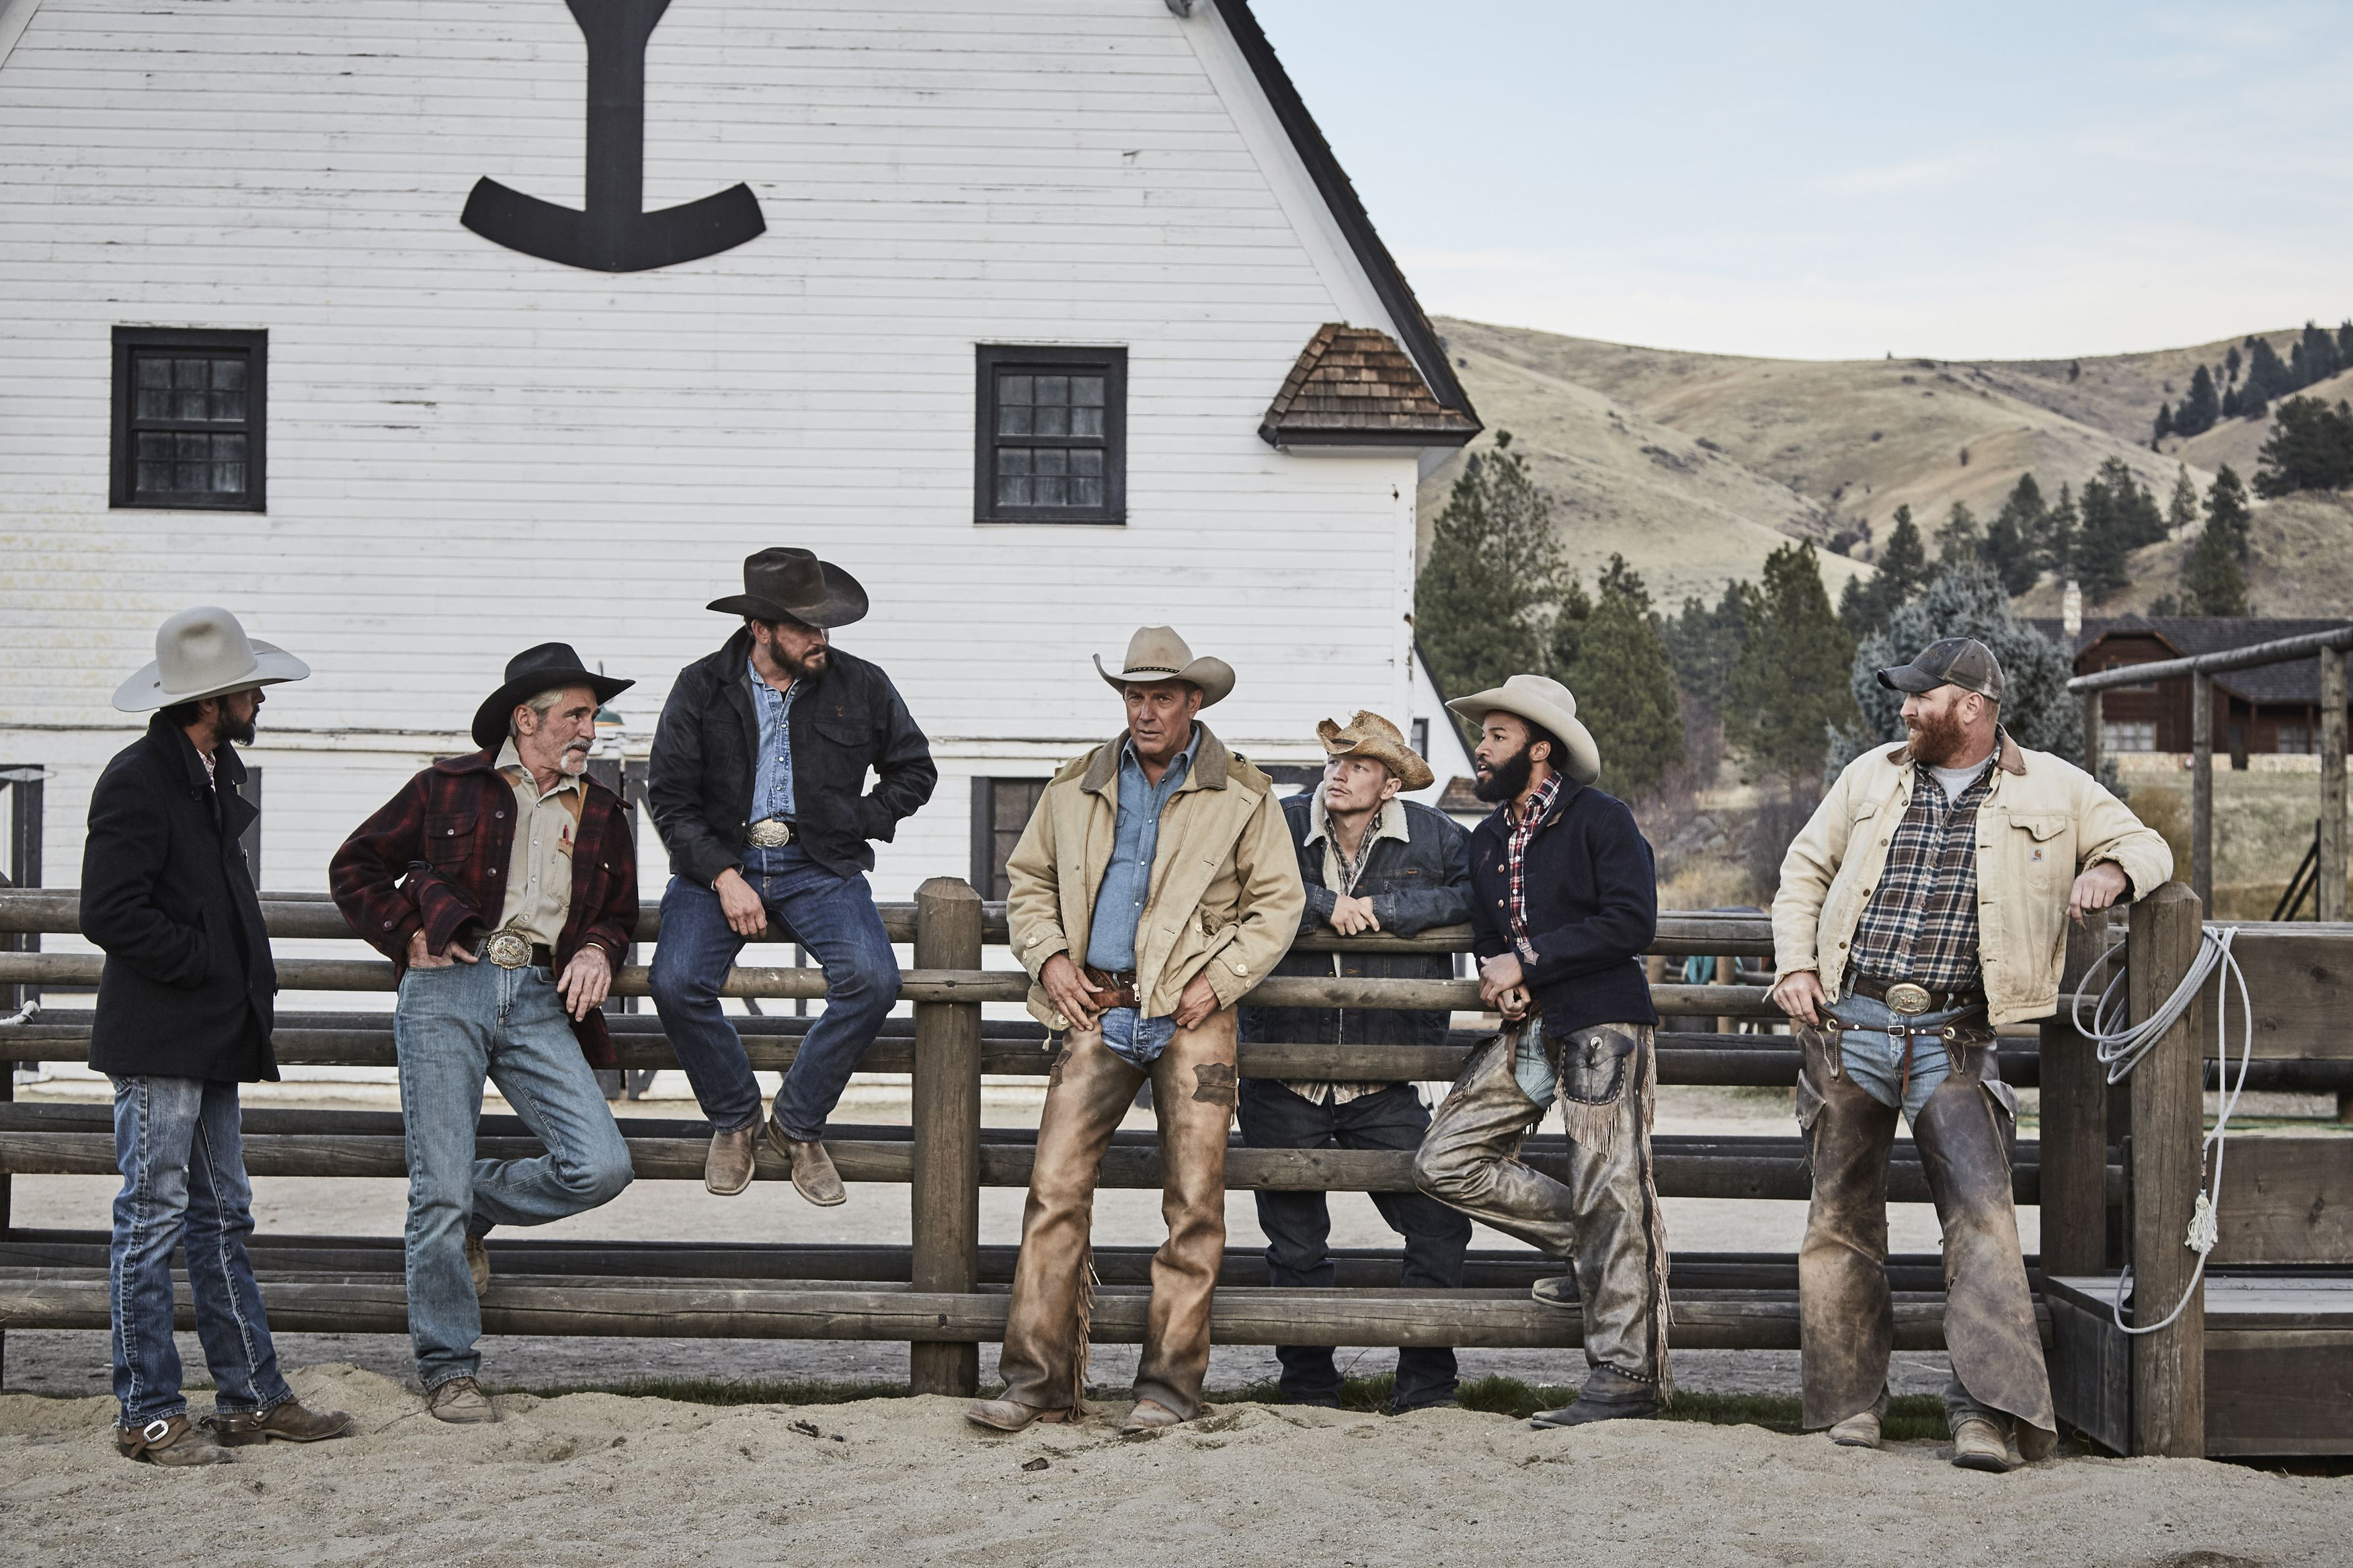 Yellowstone Photoshoot - The Cowboys - Yellowstone Photo (41605594 ...